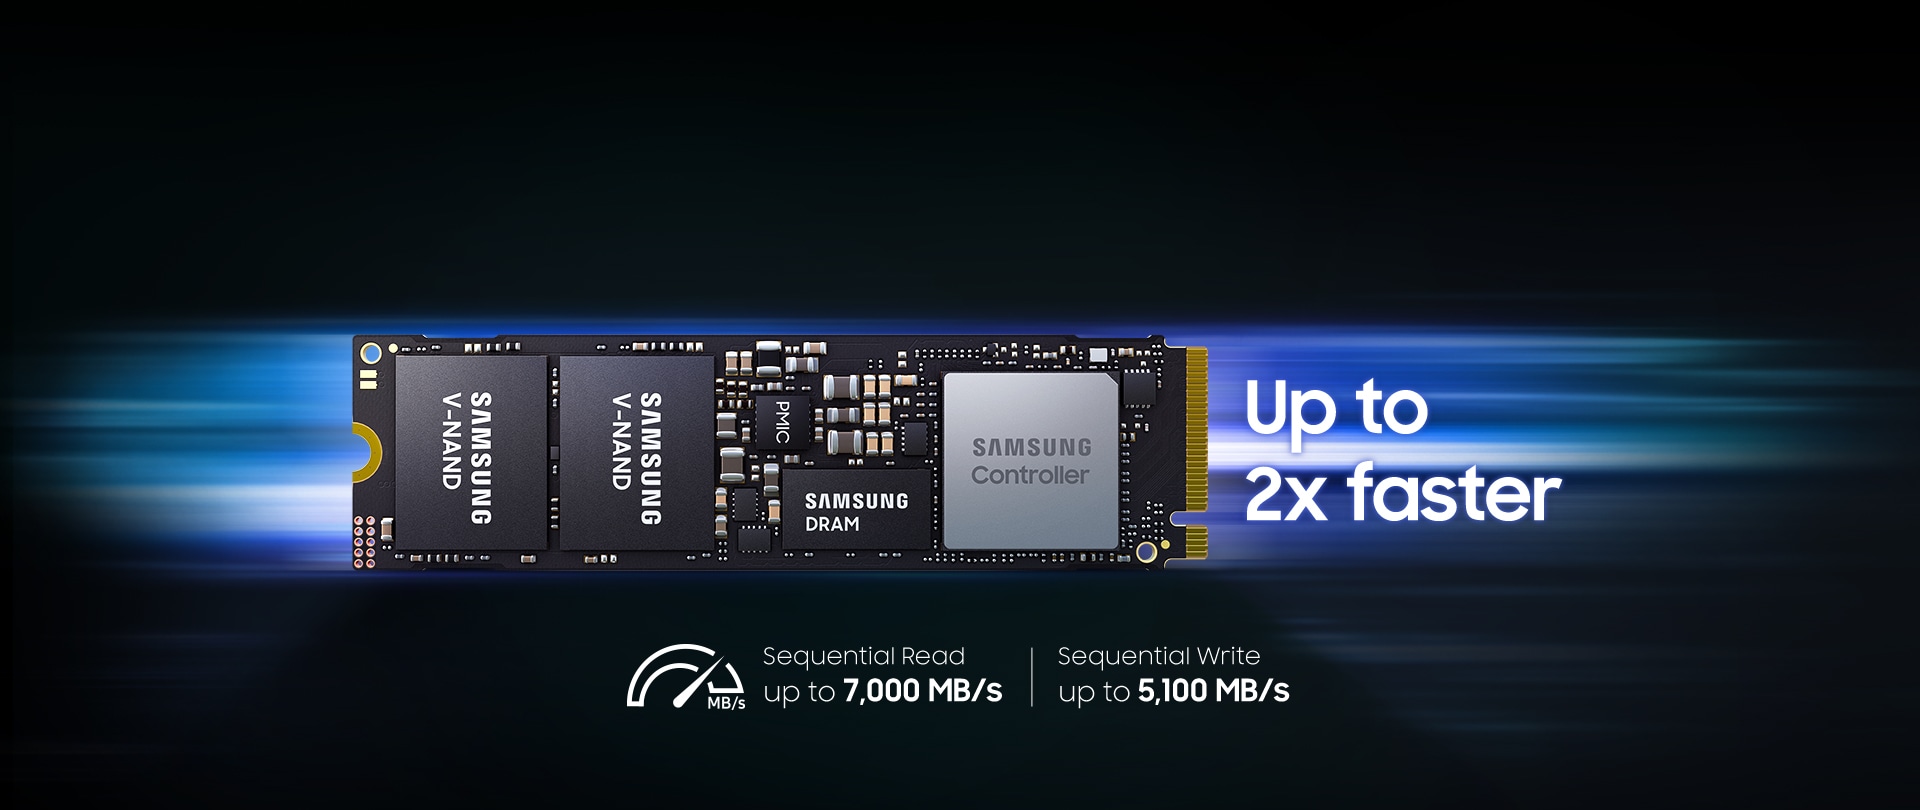 NAND 메모리, 삼성 DRAM 및 컨트롤러 칩과 같은 구성 요소를 갖춘 삼성의 고속 SSD입니다.